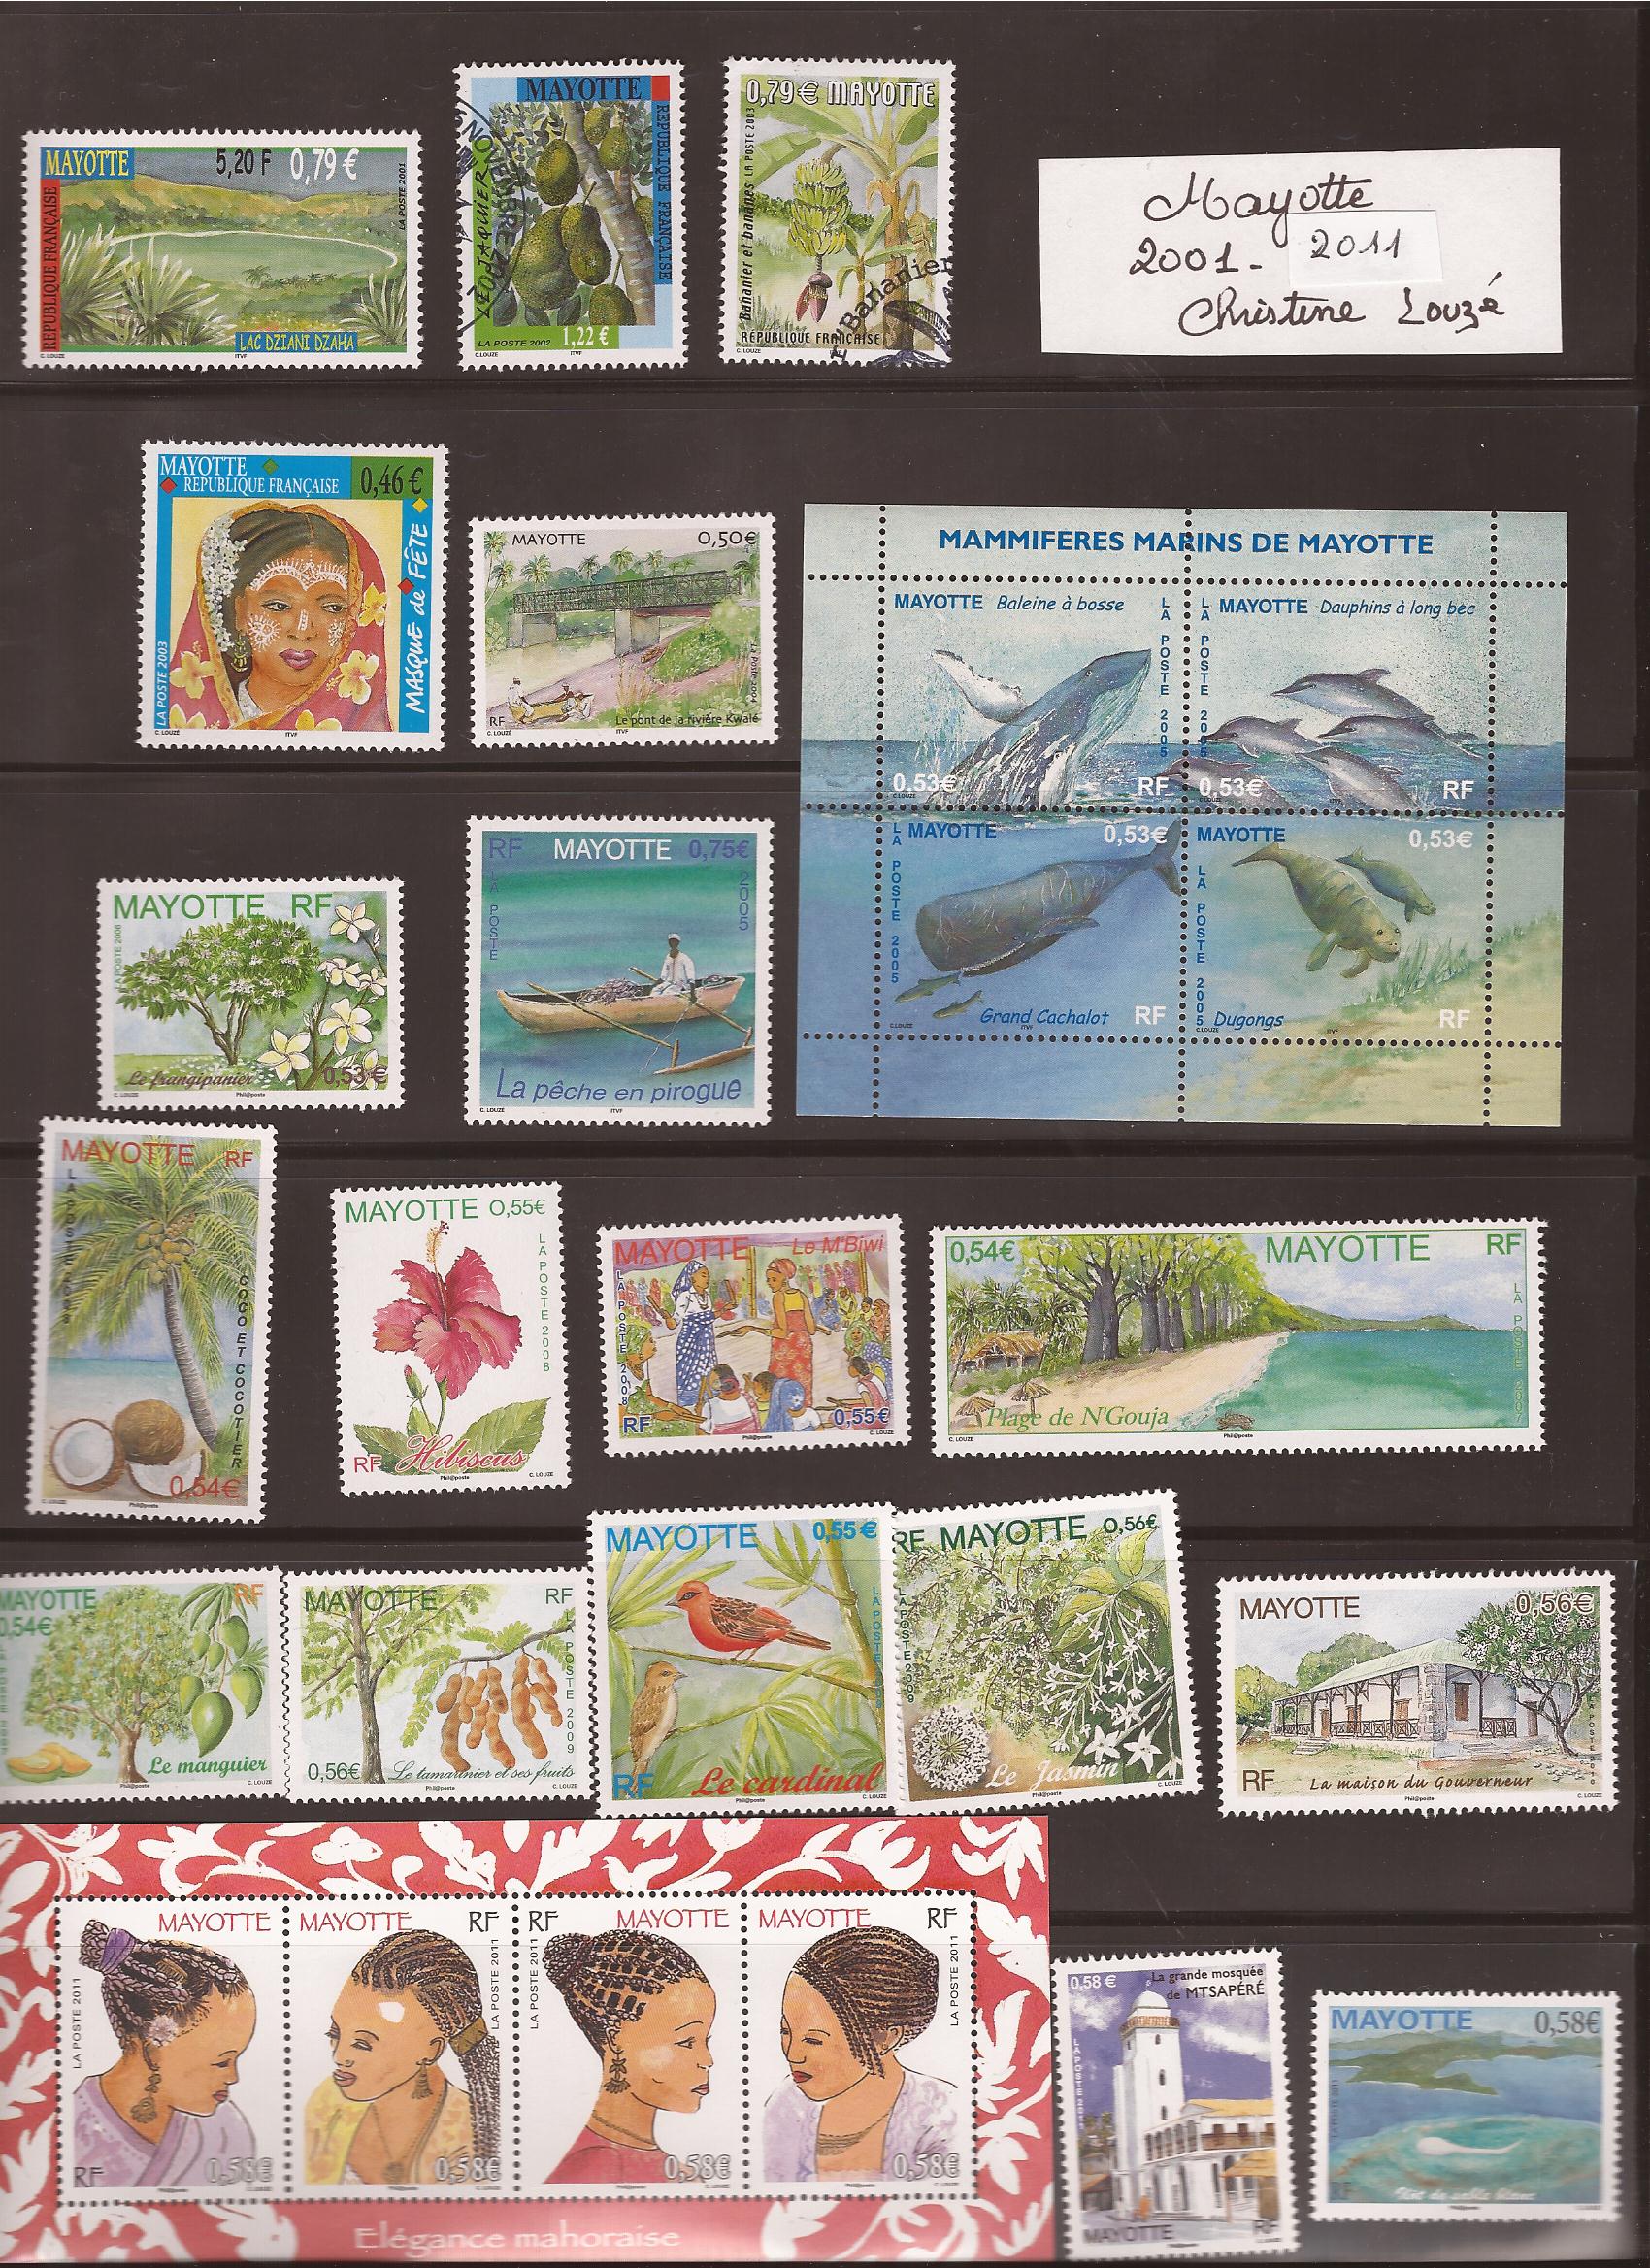 timbres de Mayotte aquarelles  Christine Louzé 